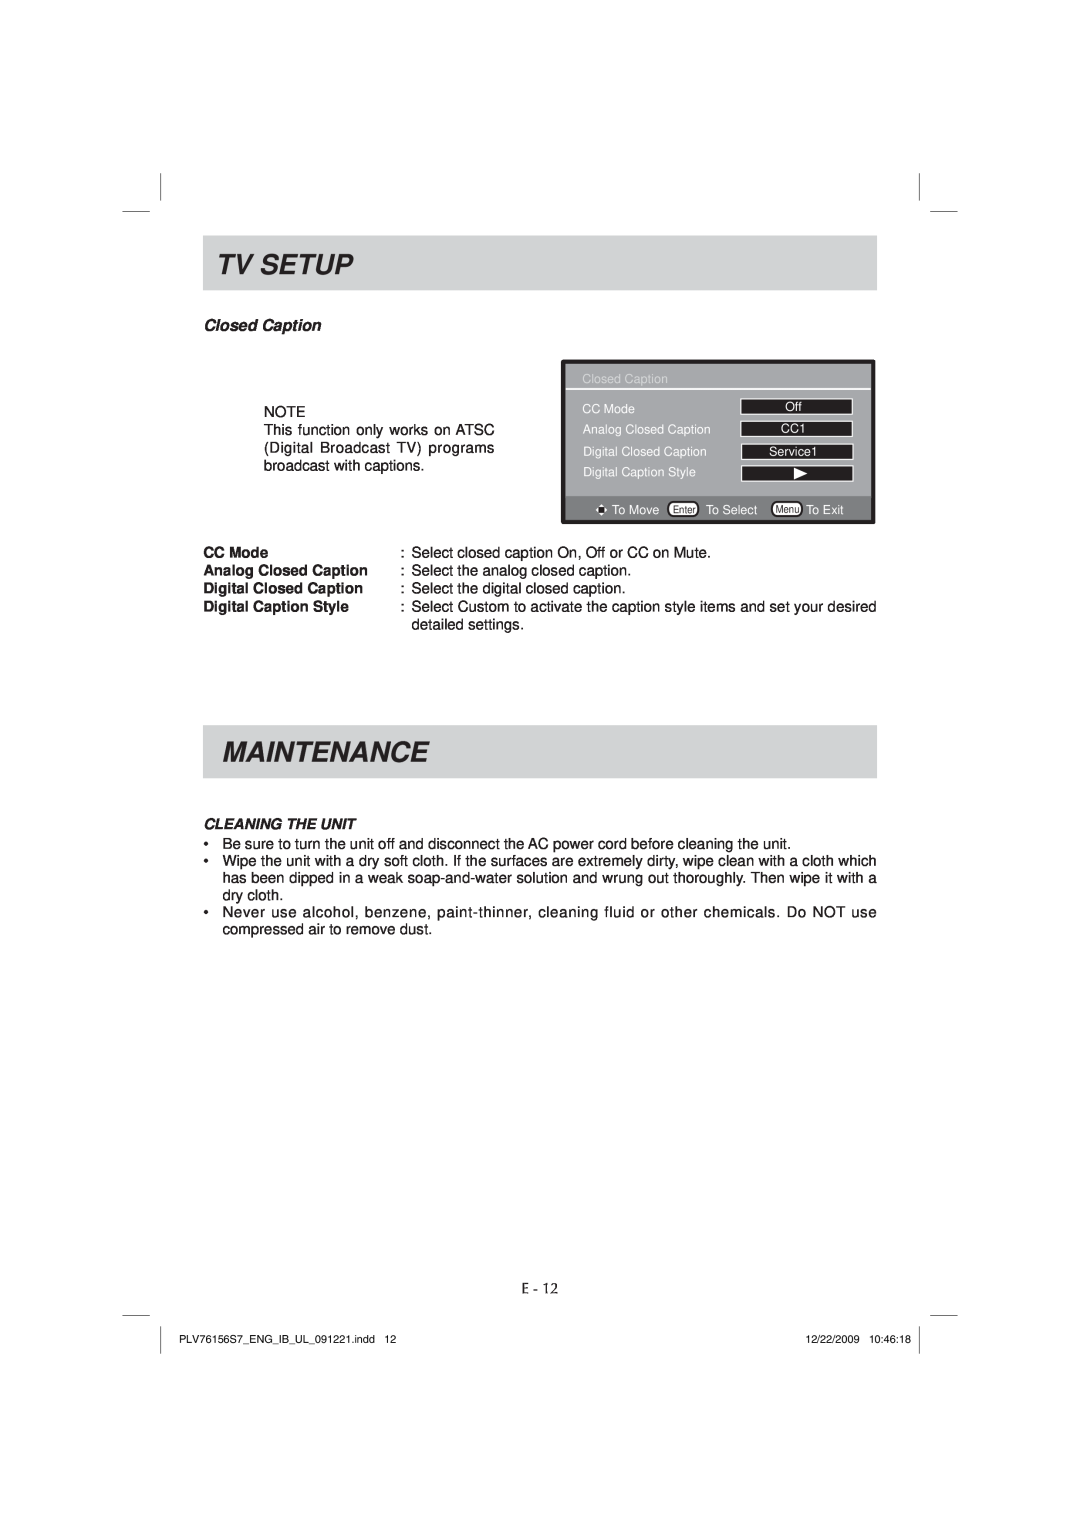 Venturer PLV7615H Maintenance, Tv Setup, CC Mode, Analog Closed Caption, Digital Closed Caption, Digital Caption Style 